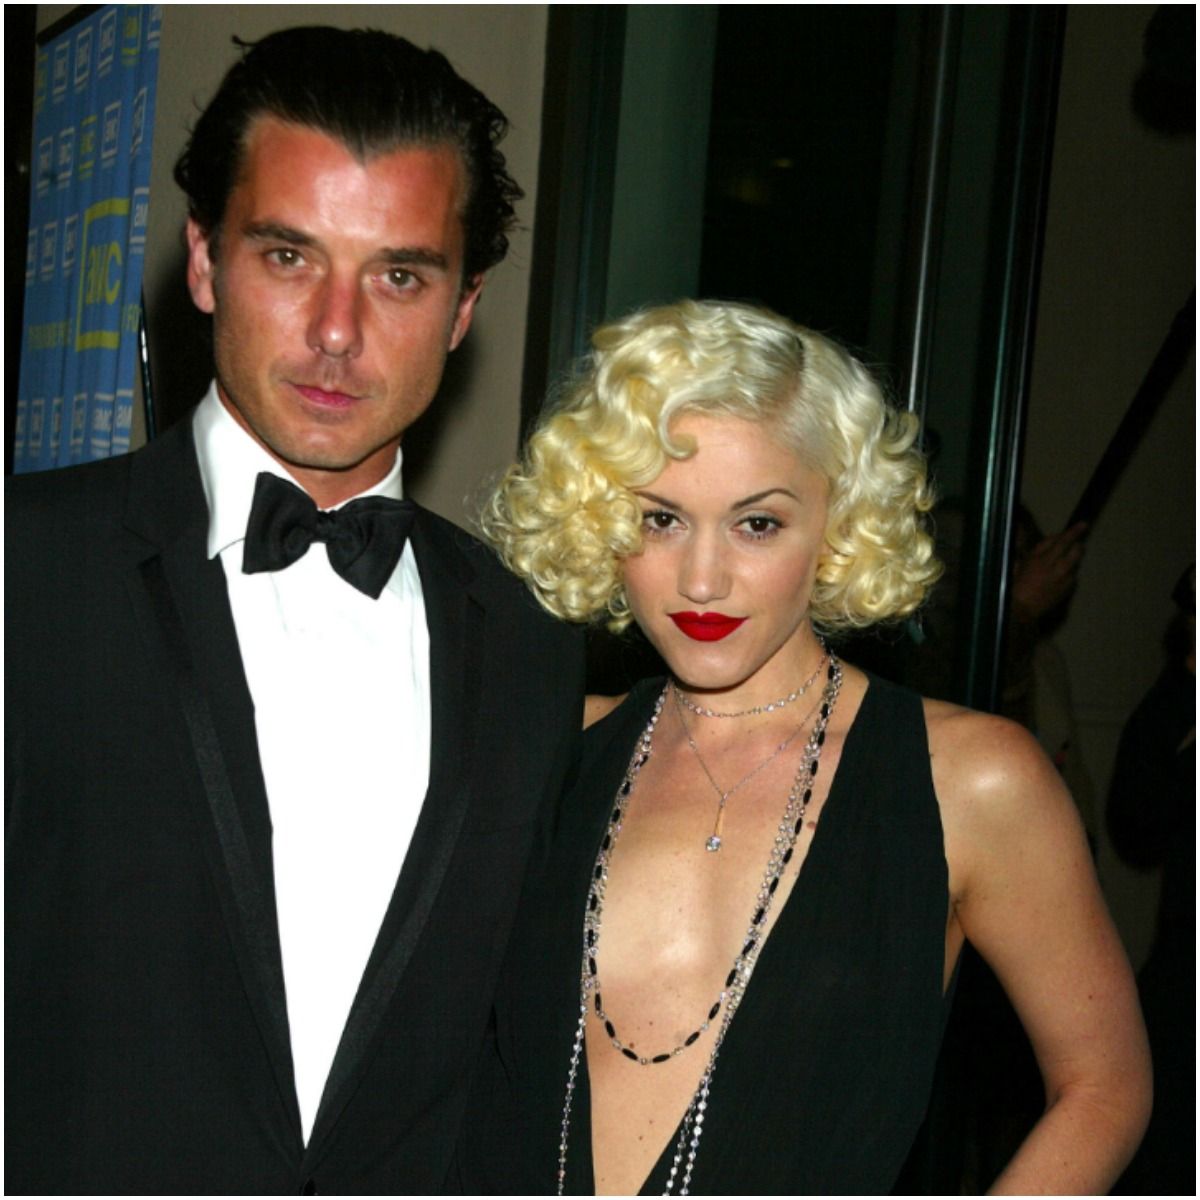 Gwen Stefani and her husband Gavin Rossdale